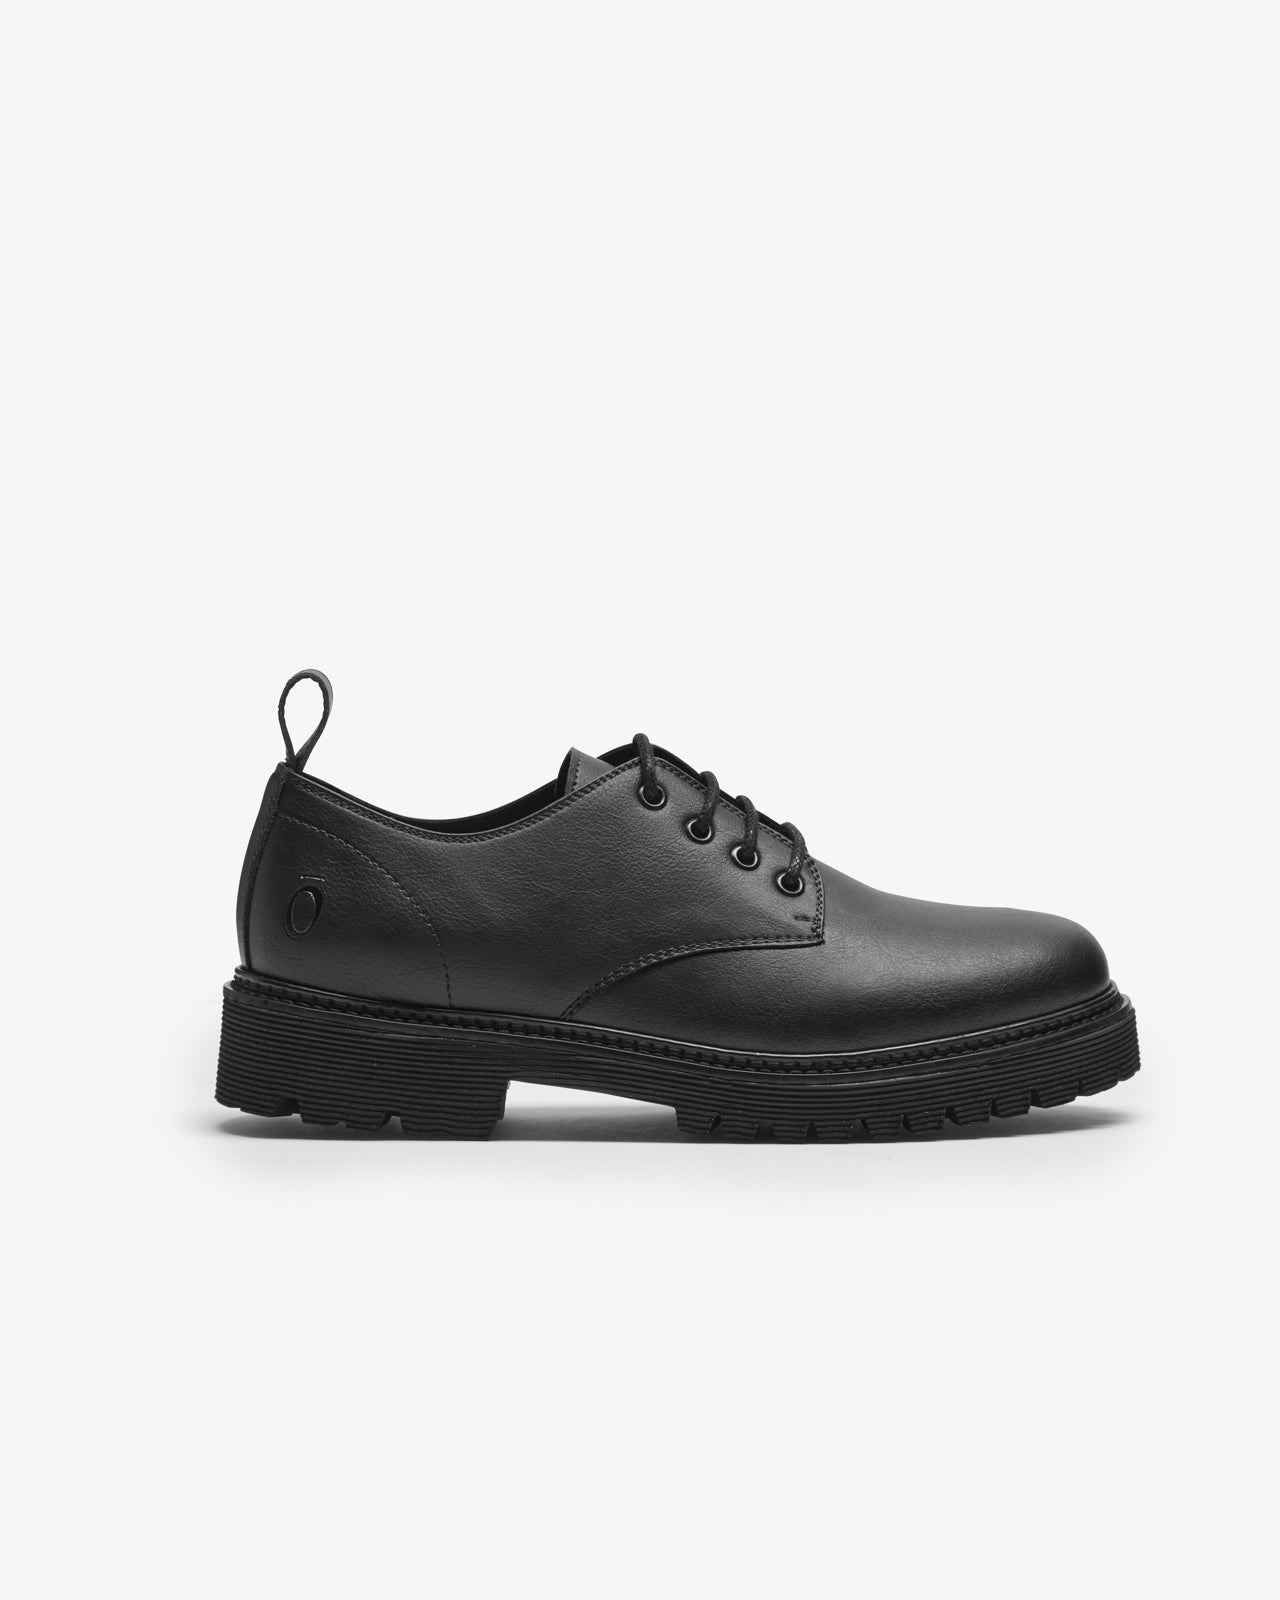 The Noskin Derby shoe in black-Noskin-stride